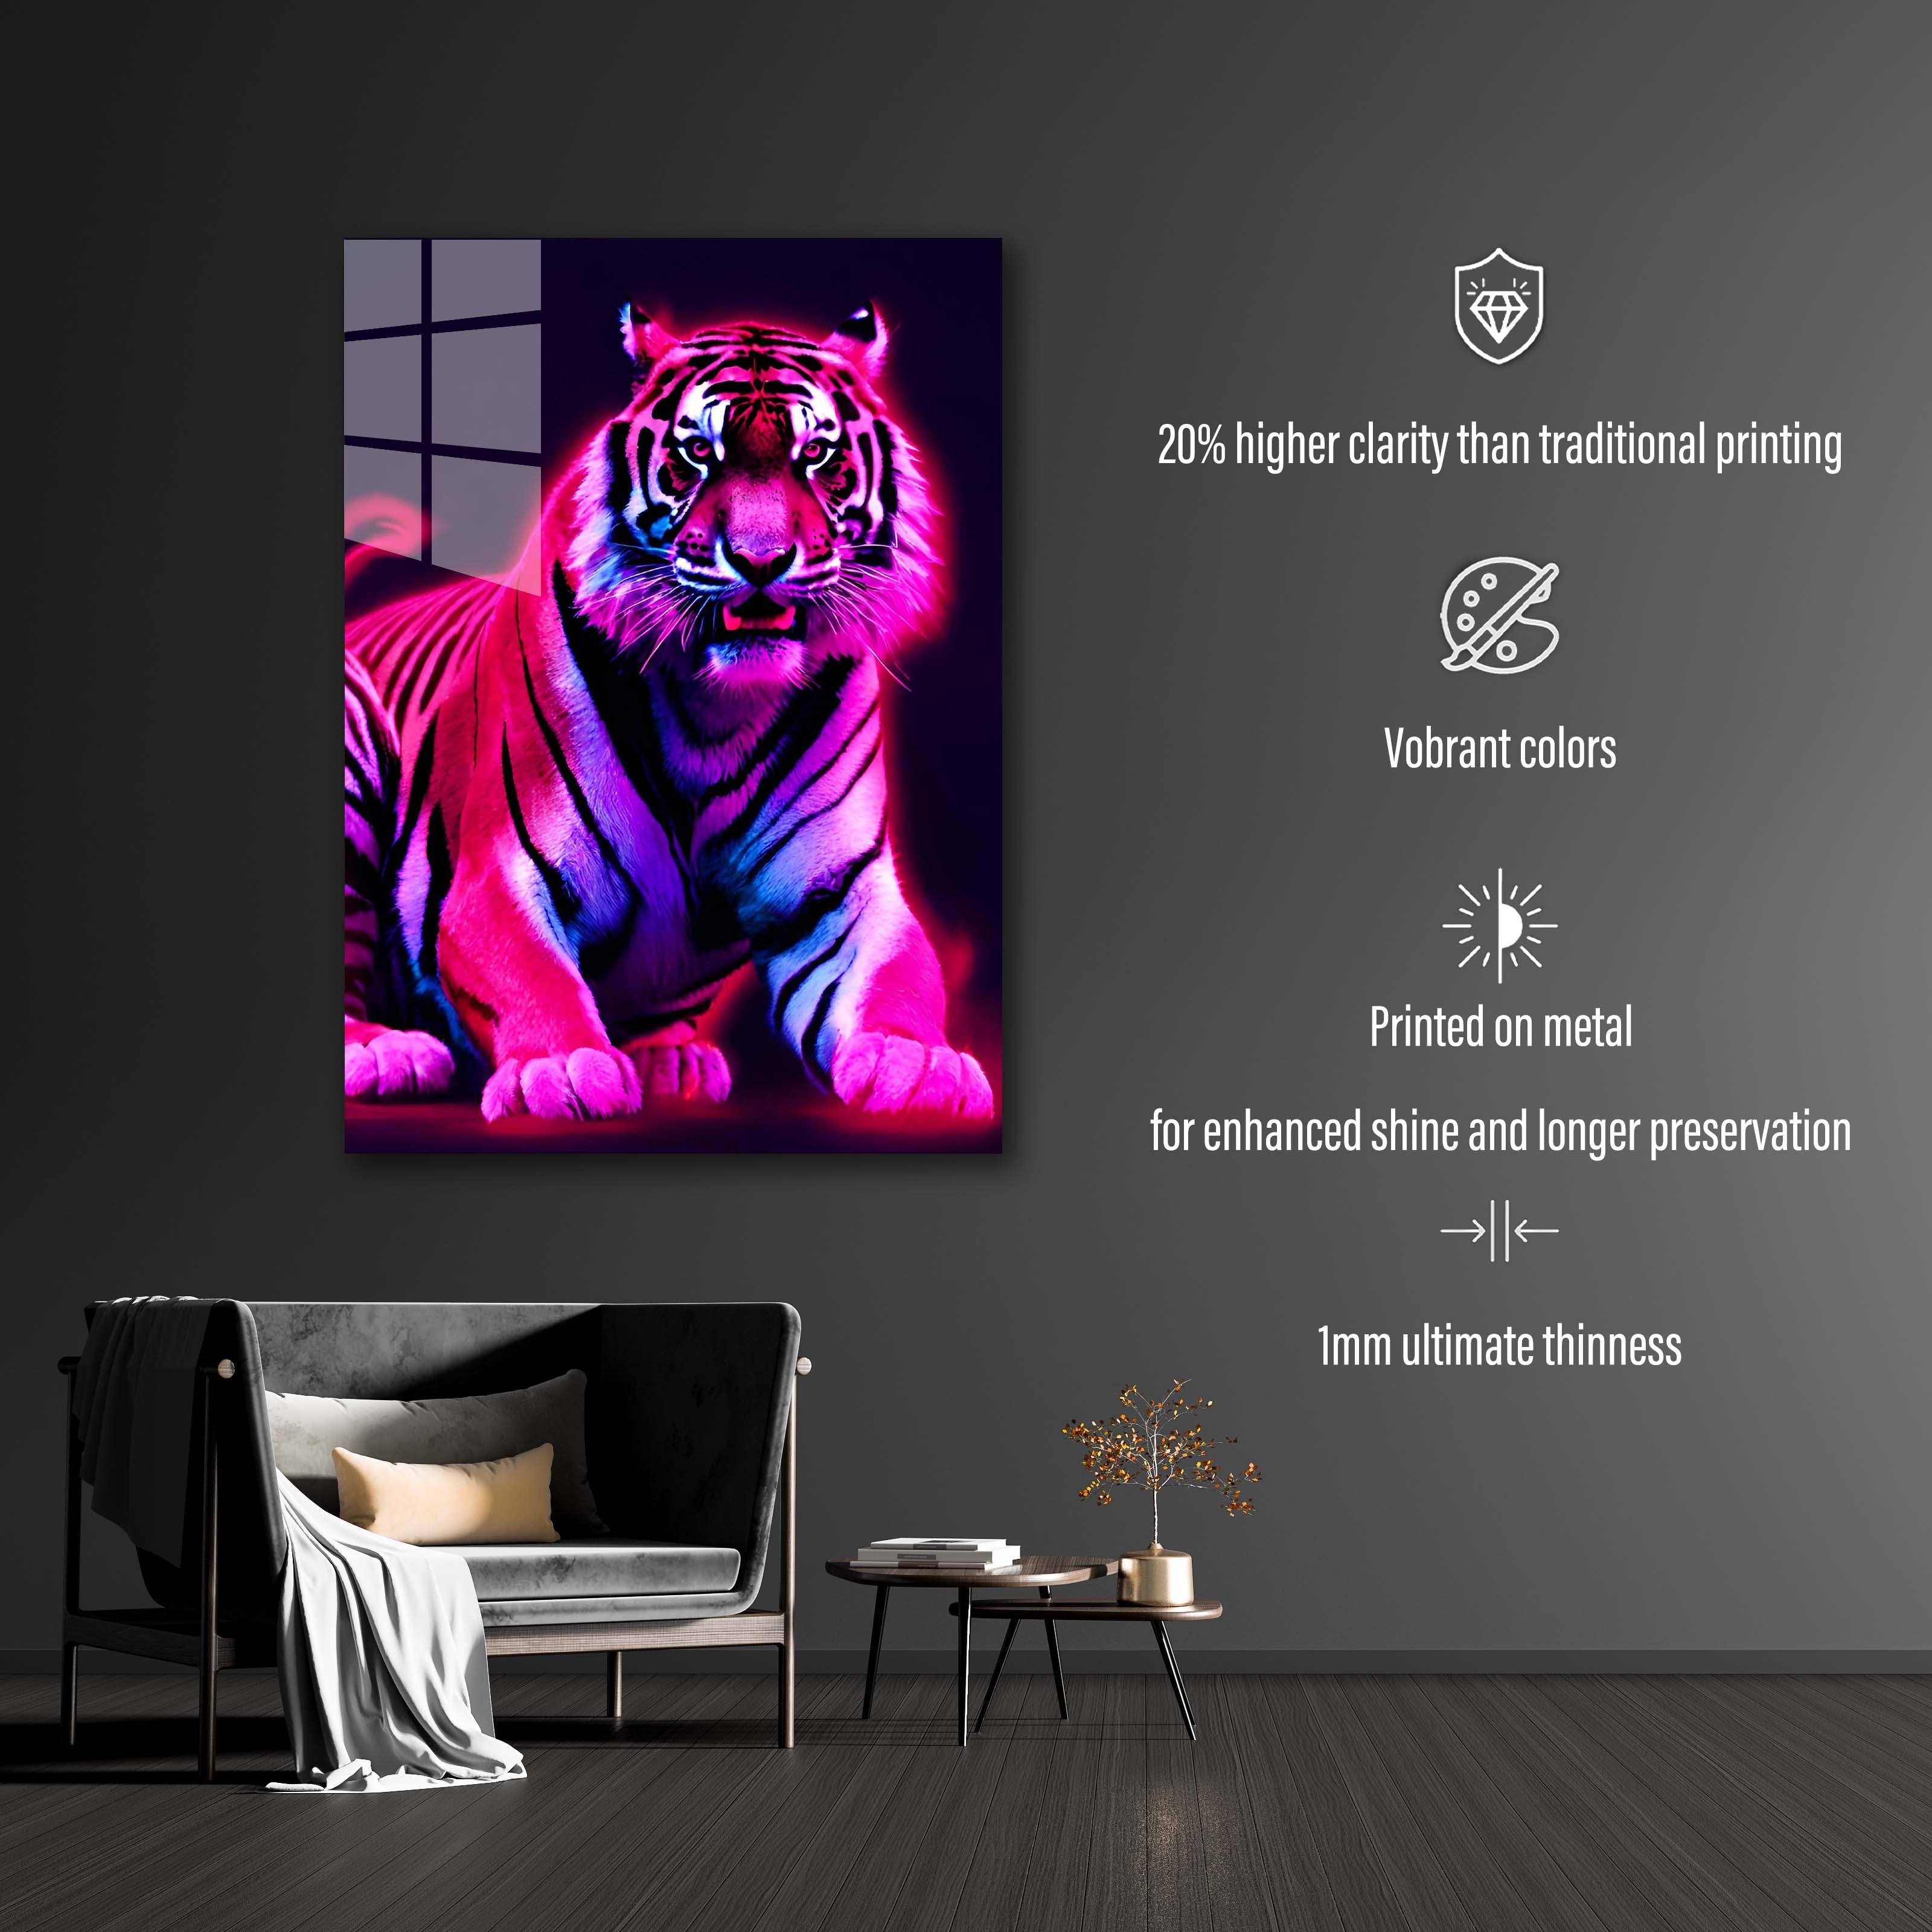 Tiger Retrowave-designed by @DynCreative